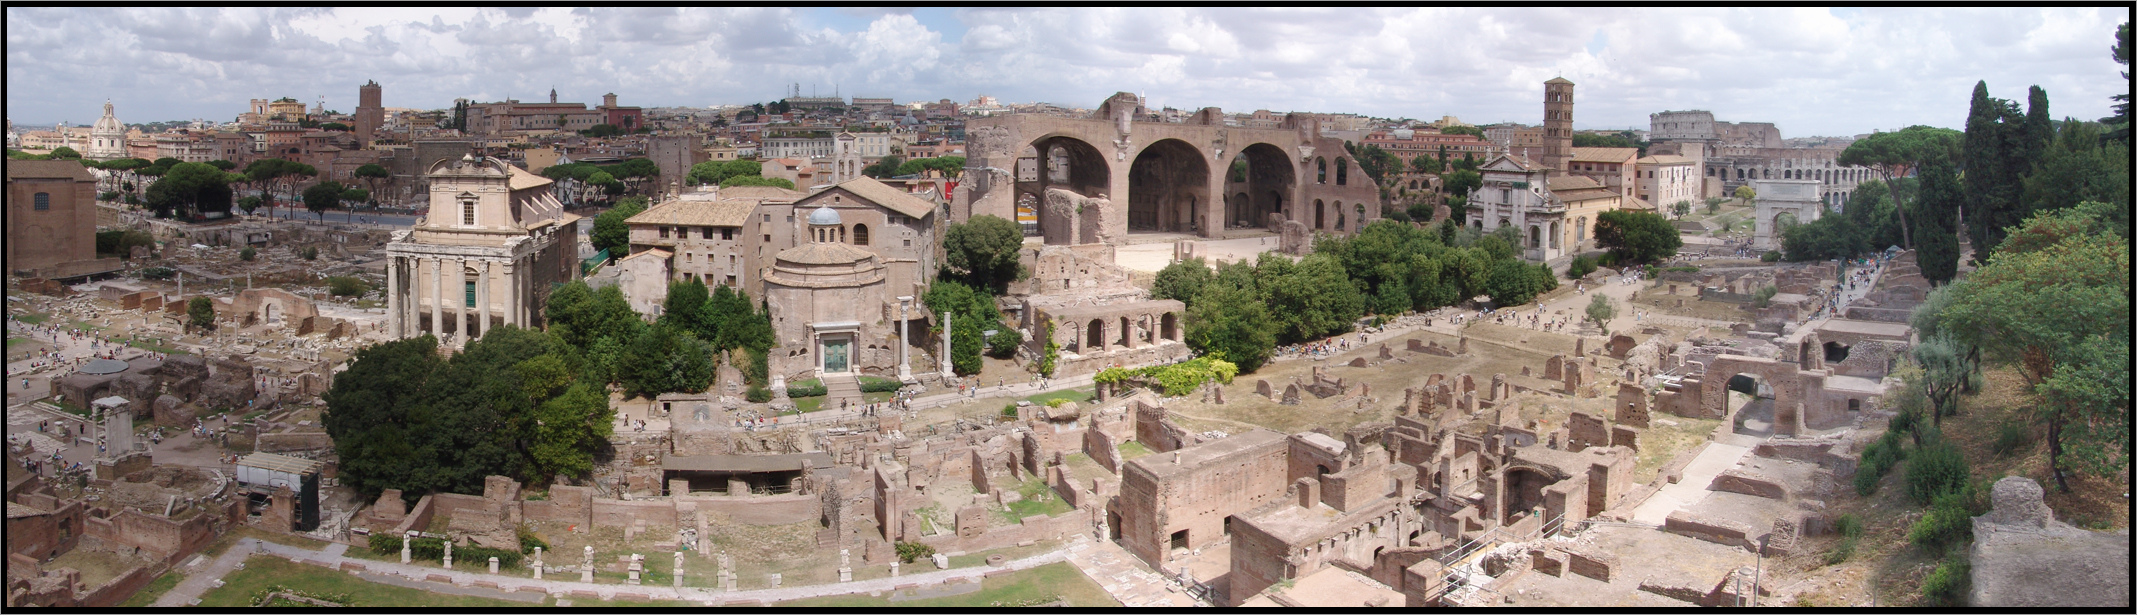 Le Forum Romain, Rome, Italie, Août 2006